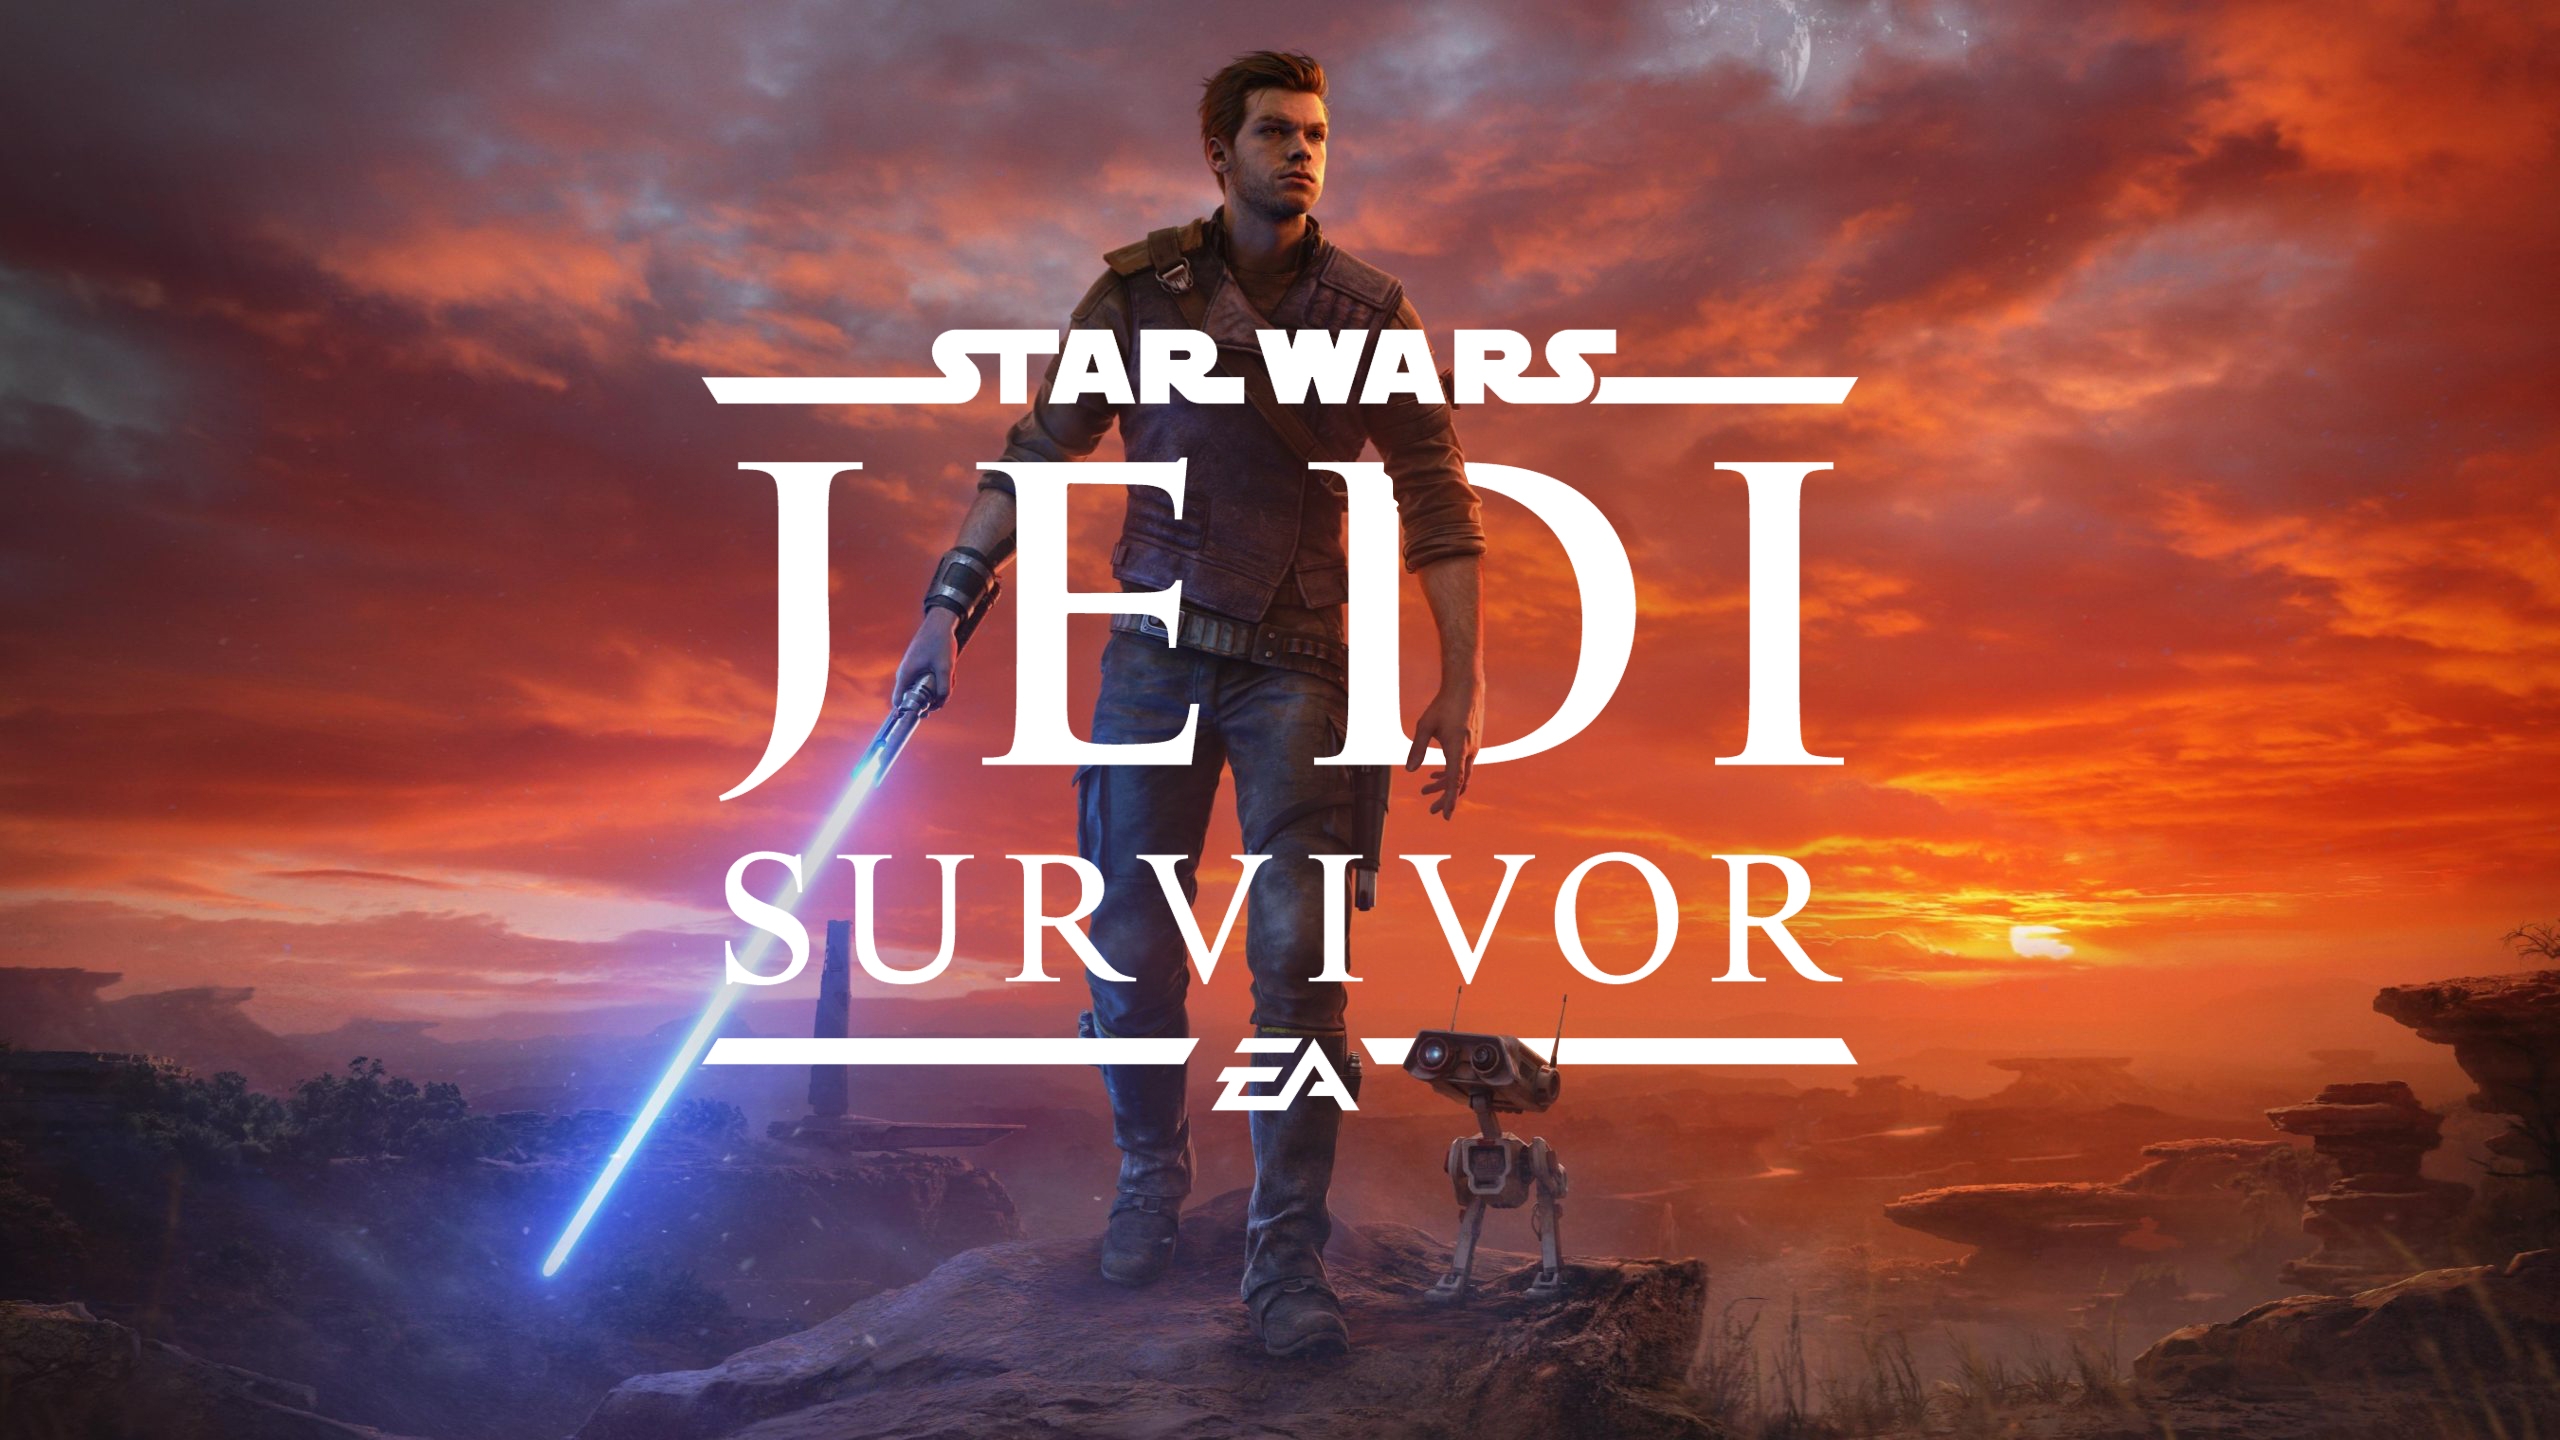 Star Wars Jedi Survivor The New Trailer Arrives Today